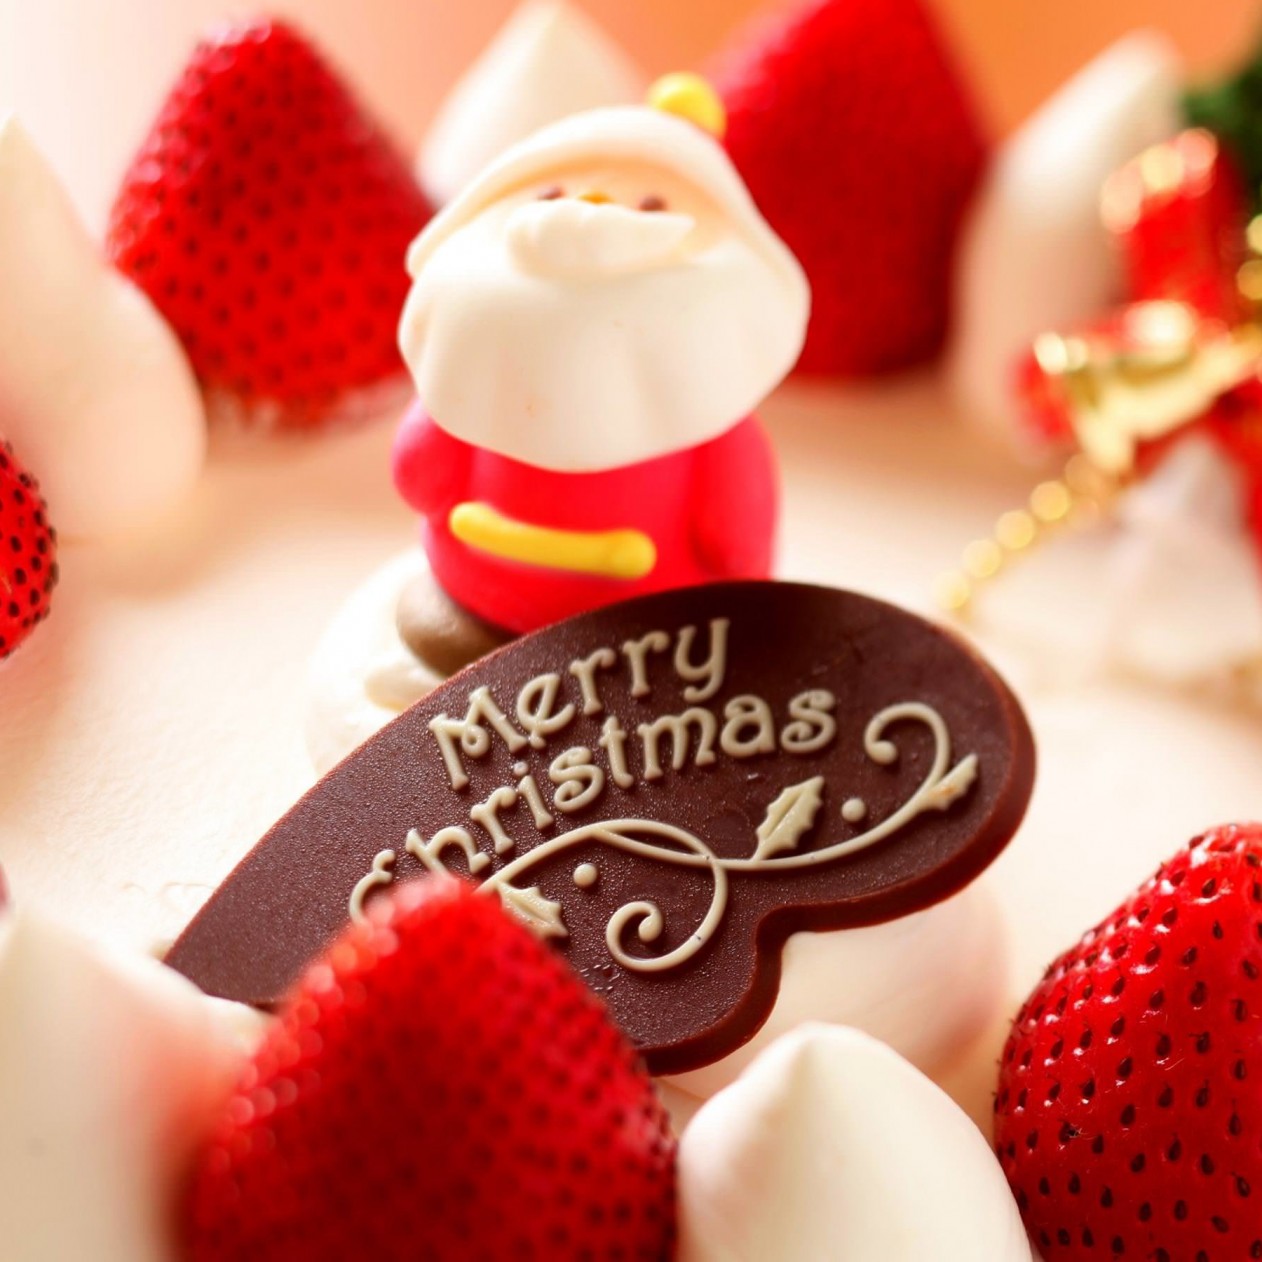 Merry Christmas Strawberry Dessert Wallpaper for Apple iPad mini